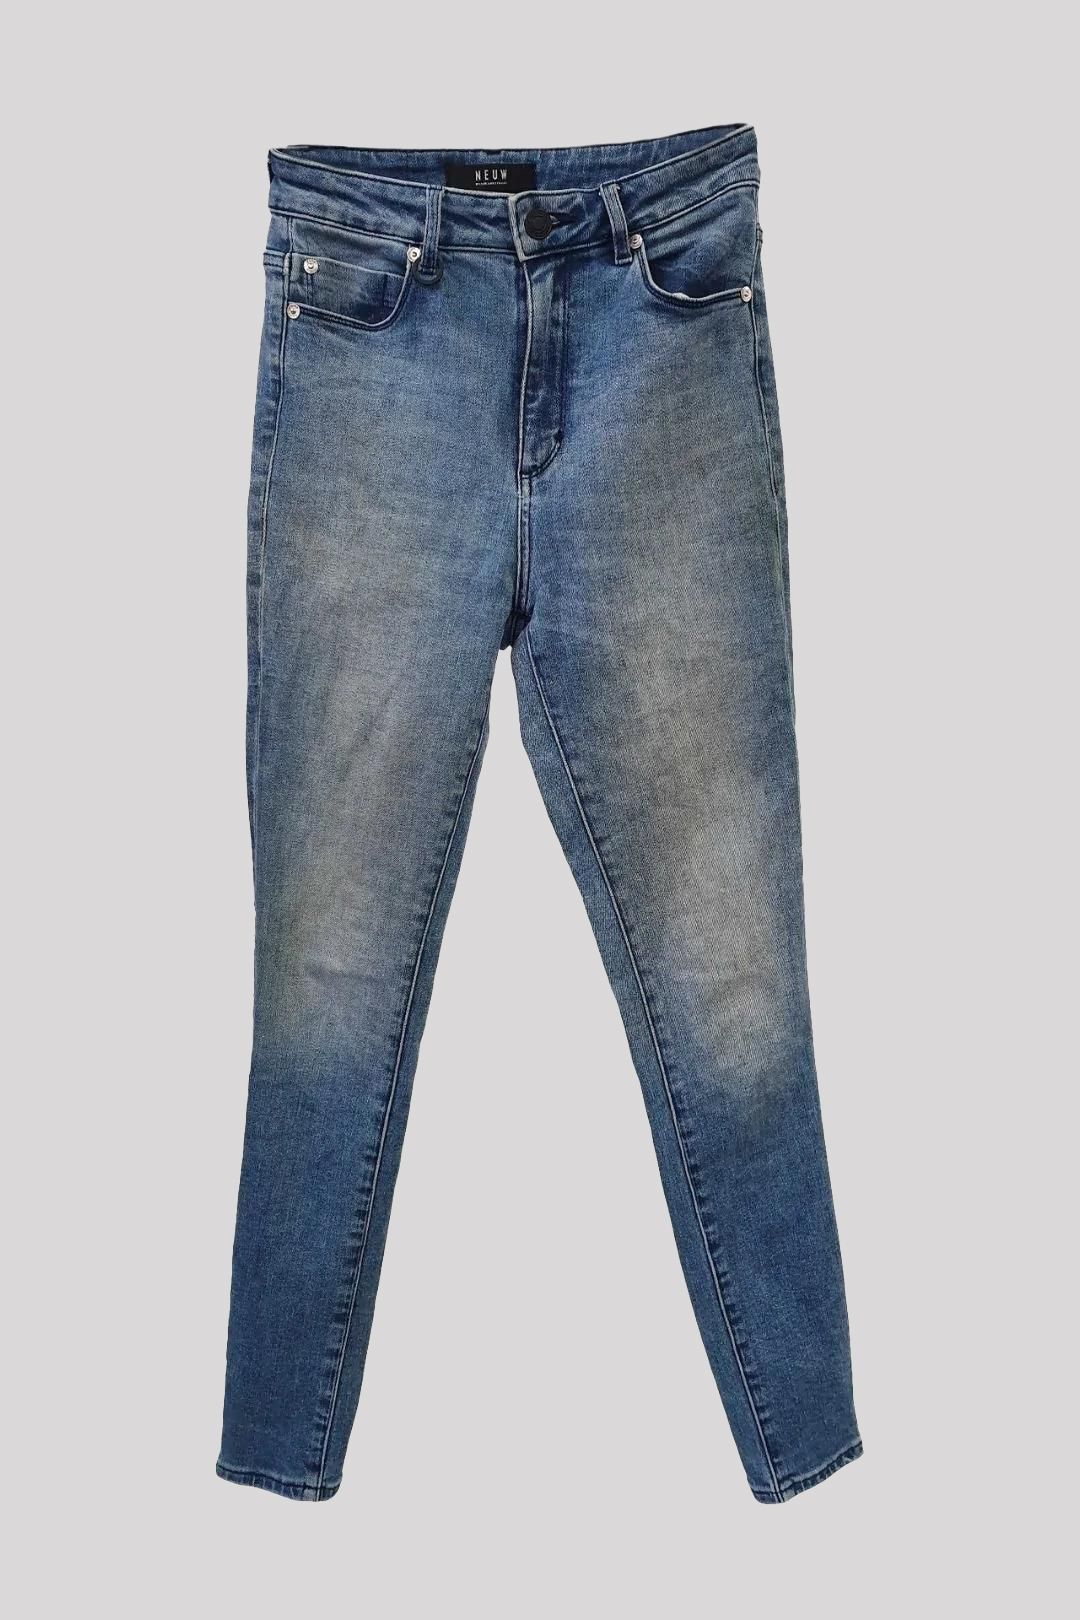 Neuw Denim - Skinny Jeans Mid Rise